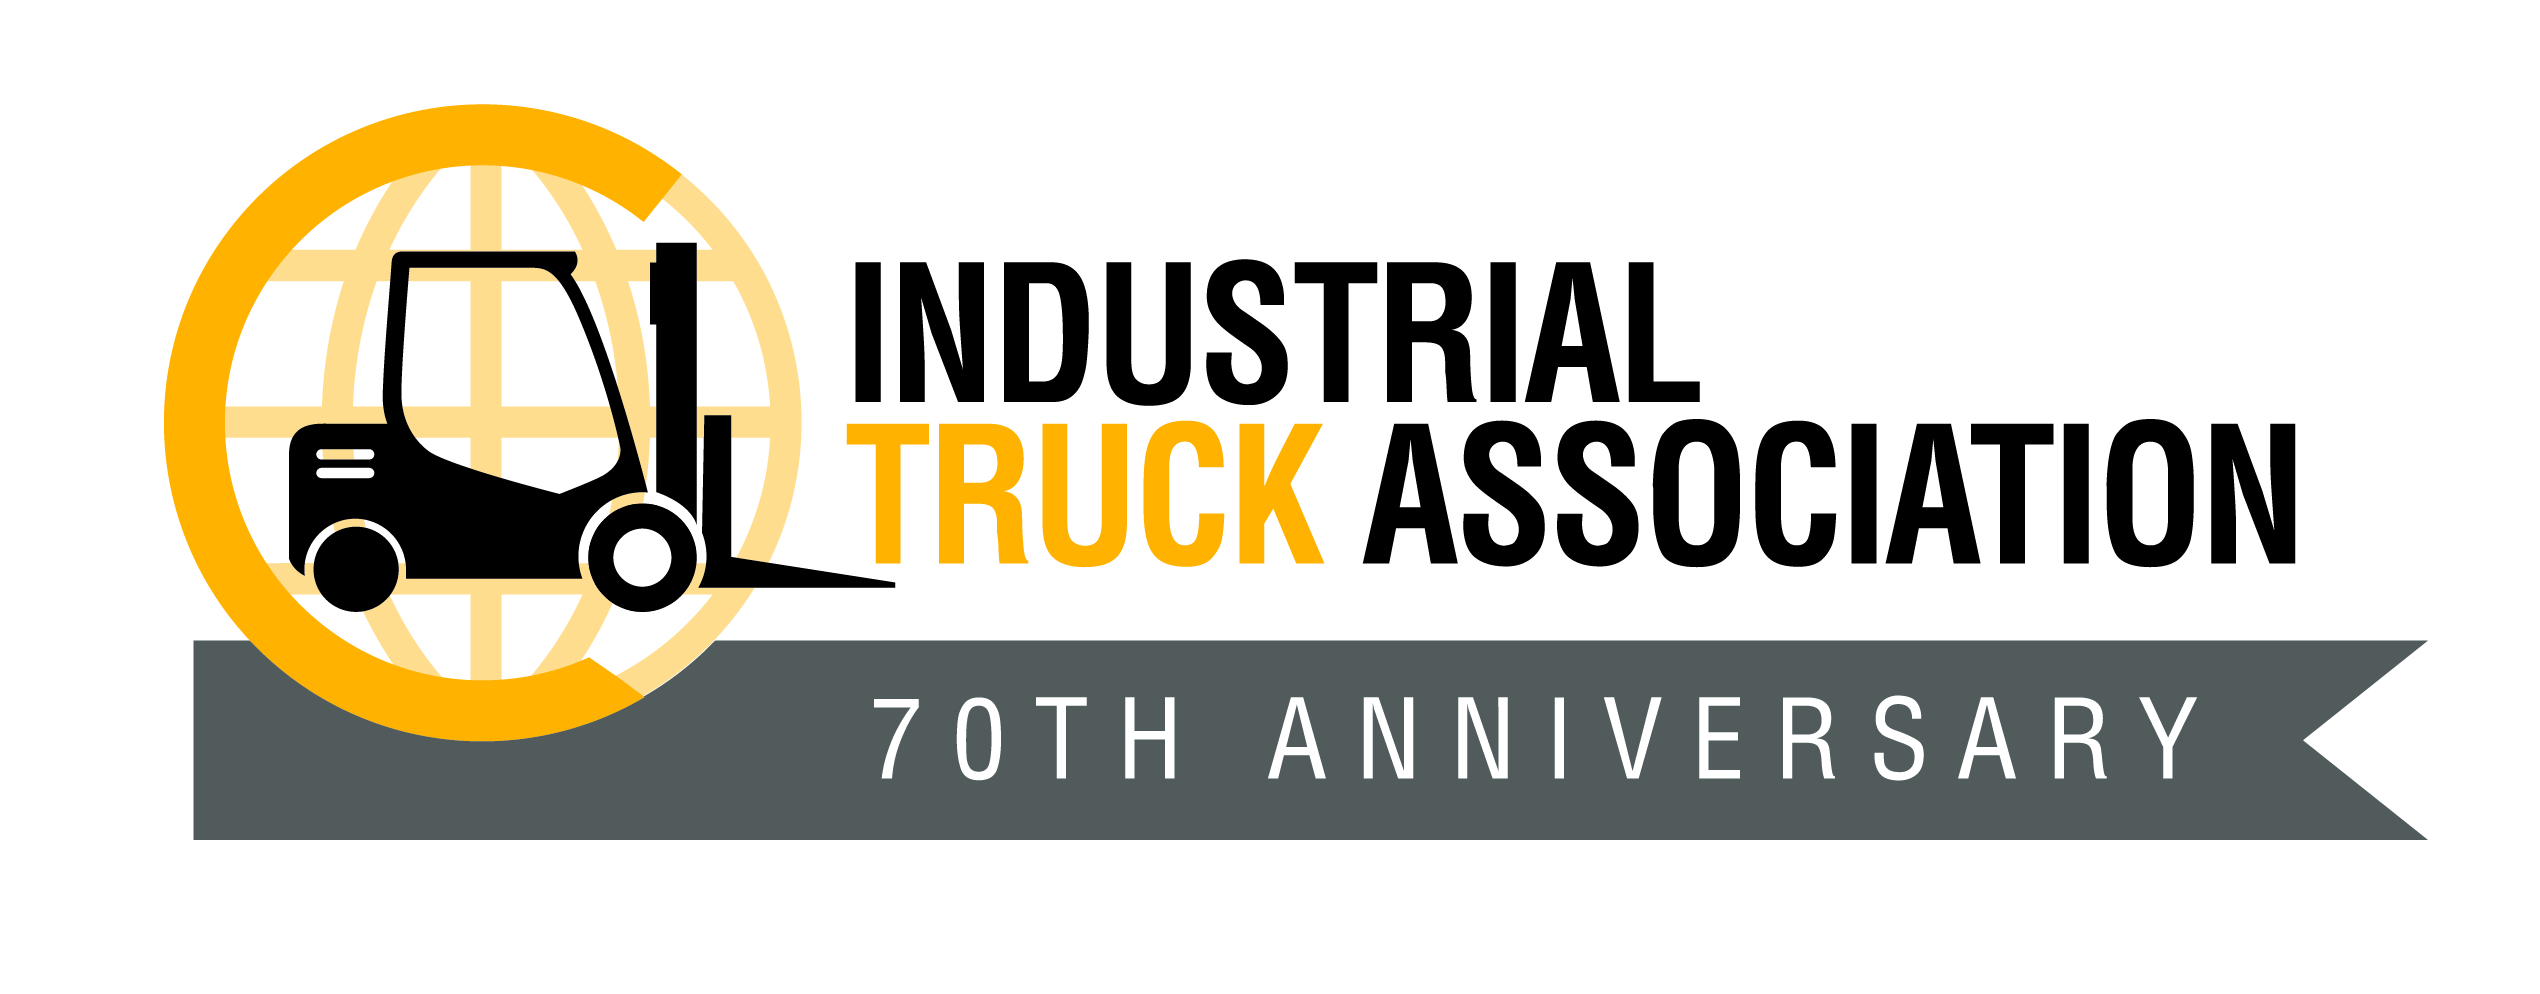 Industrial-Truck-Association--logo